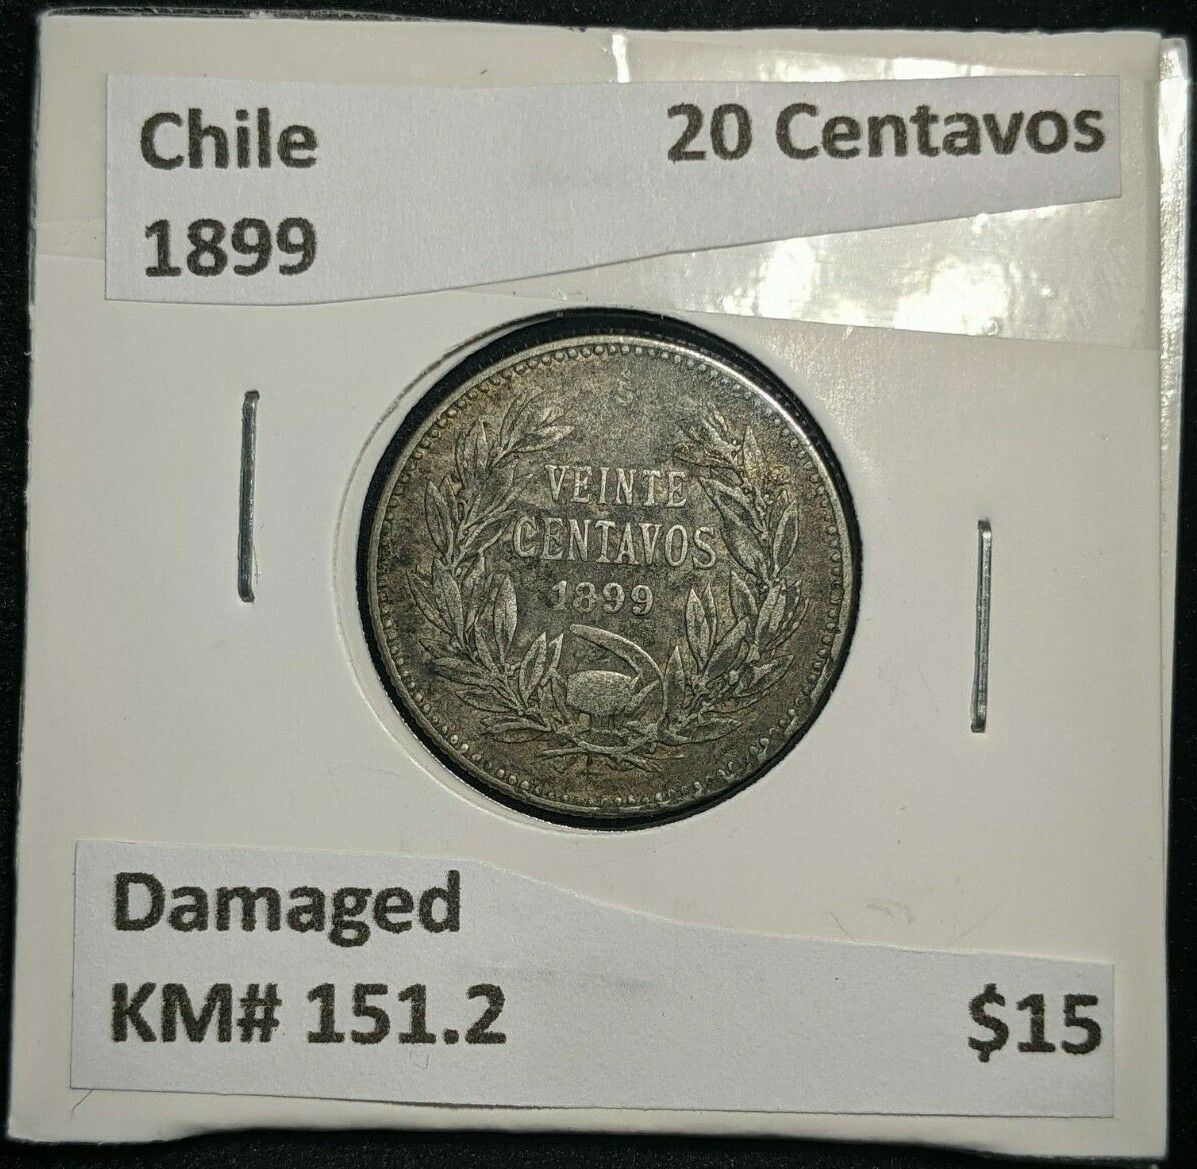 Chile 1899 20 Centavos KM# 151.2 Damaged #096